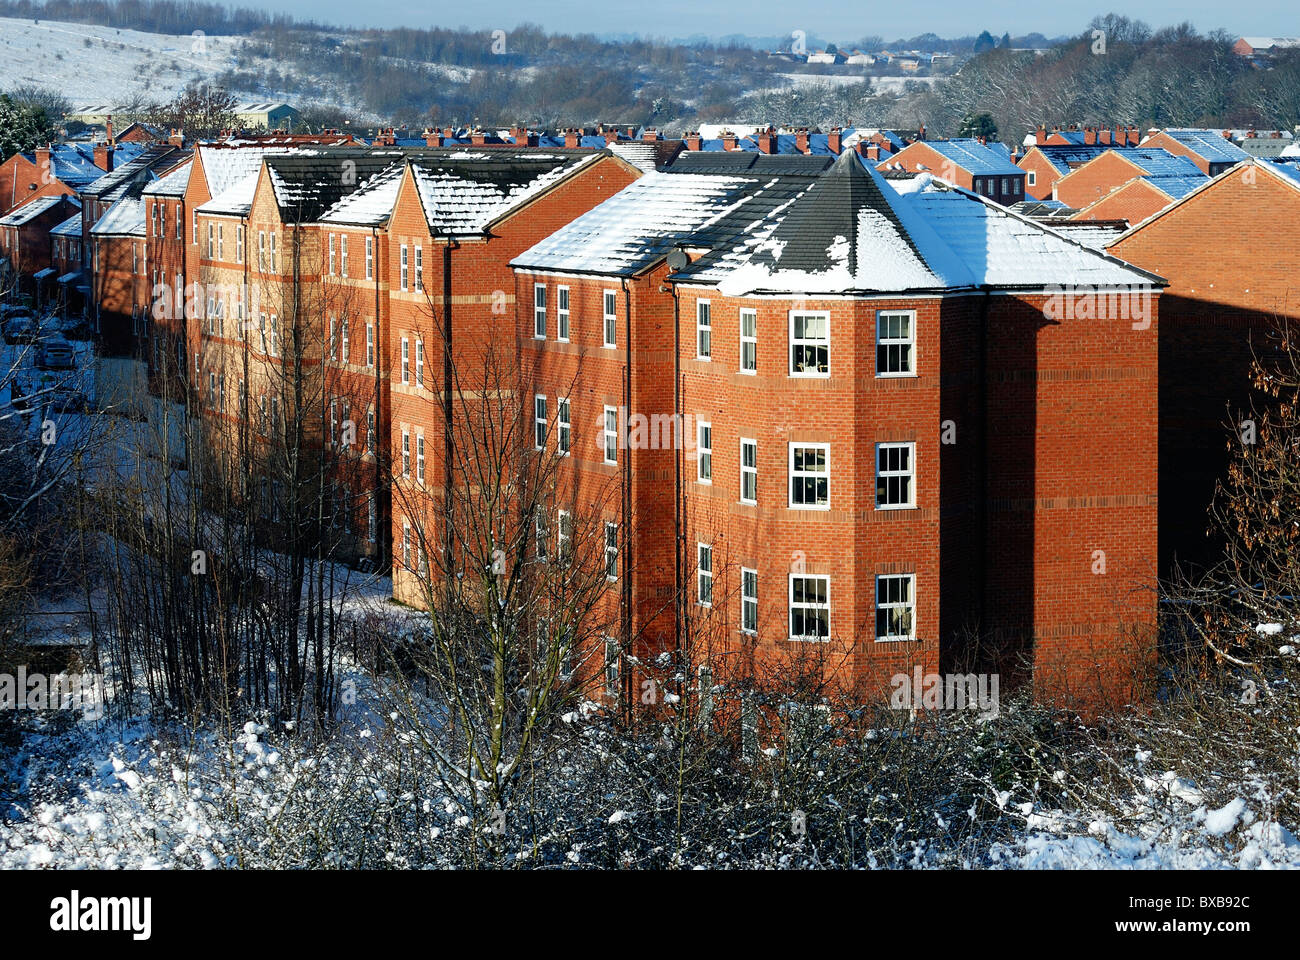 snow scene flats apartments england uk Stock Photo